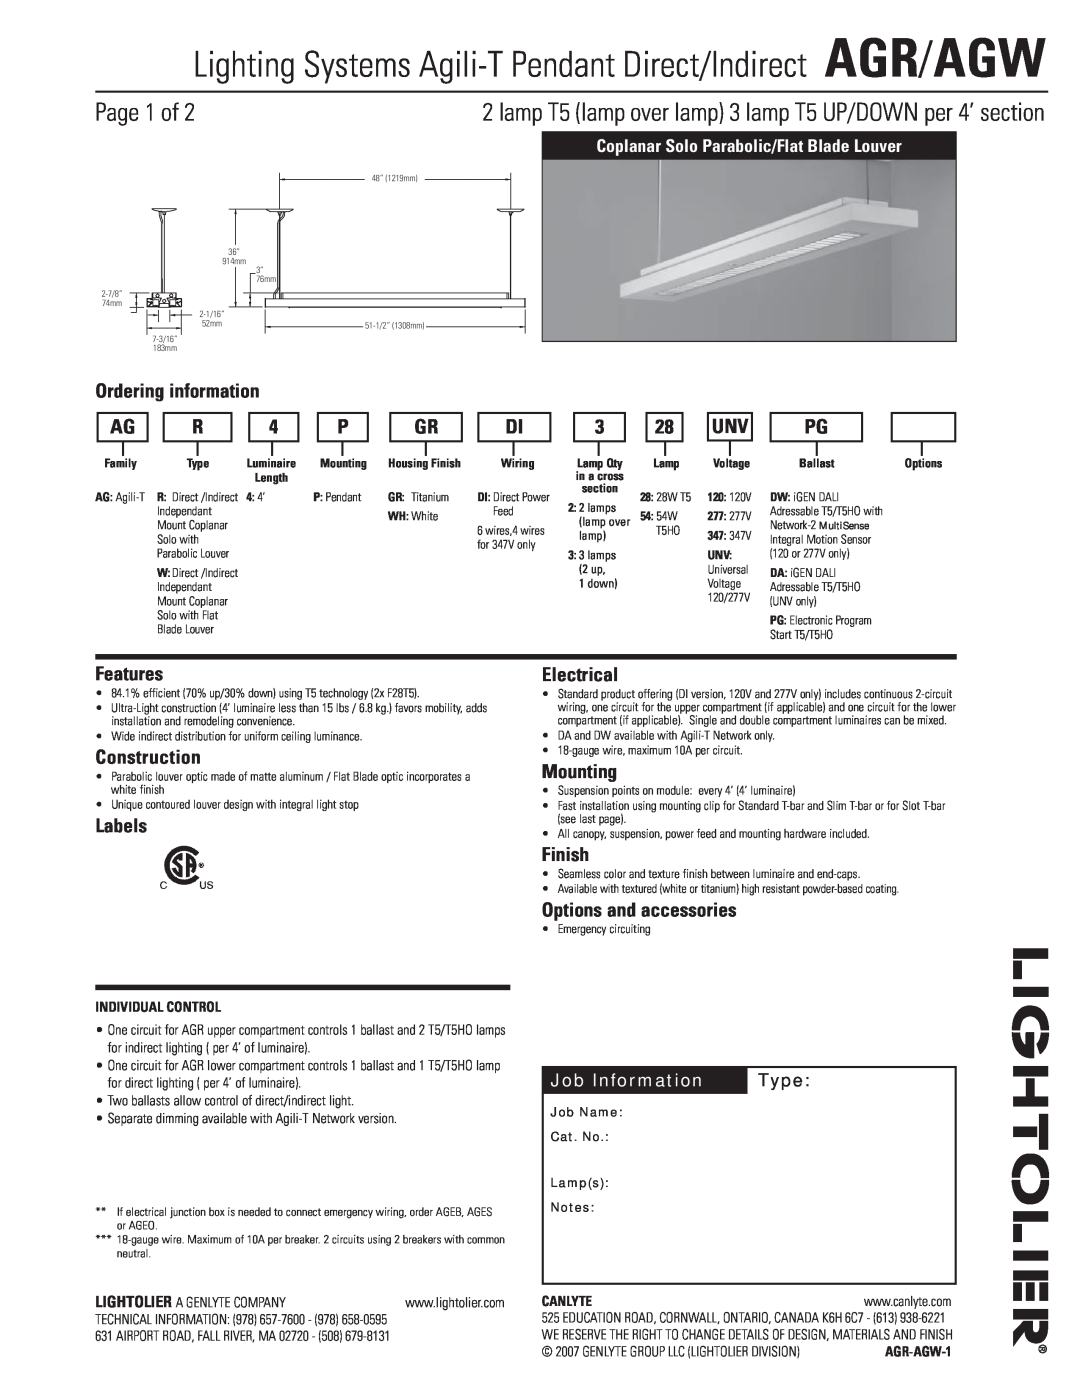 Lightolier AGR, AGW manual Page 1 of 